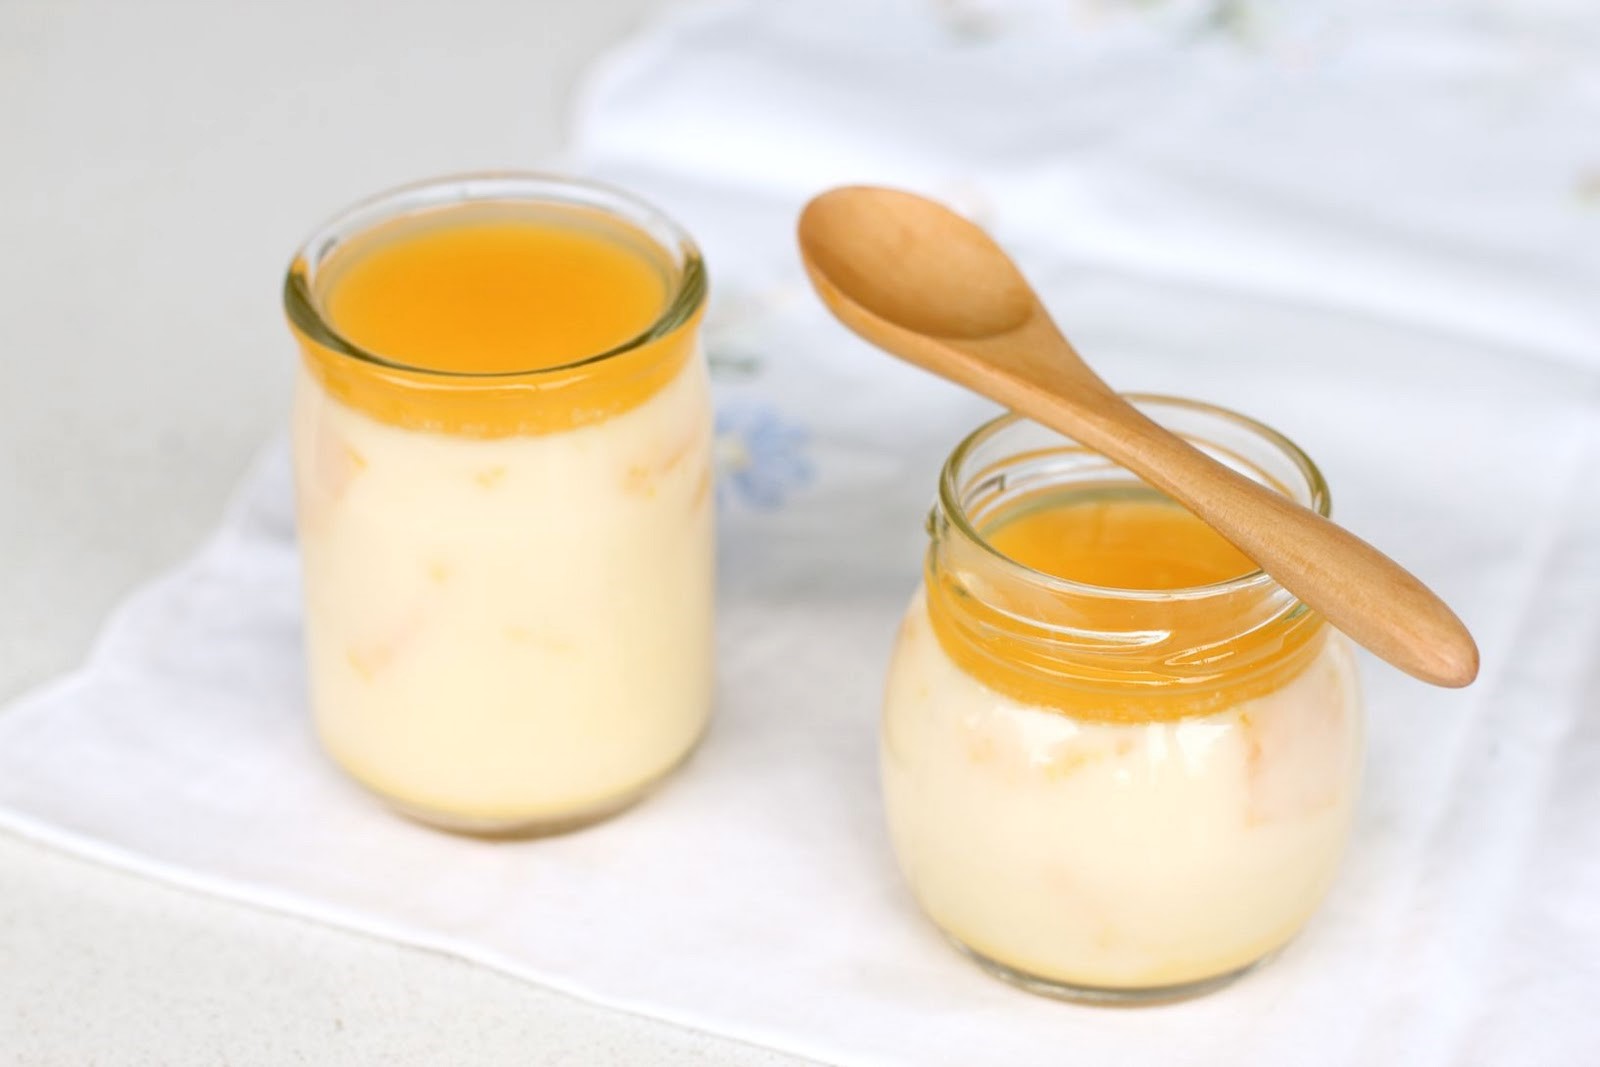 Можно ли мед с молоком при температуре